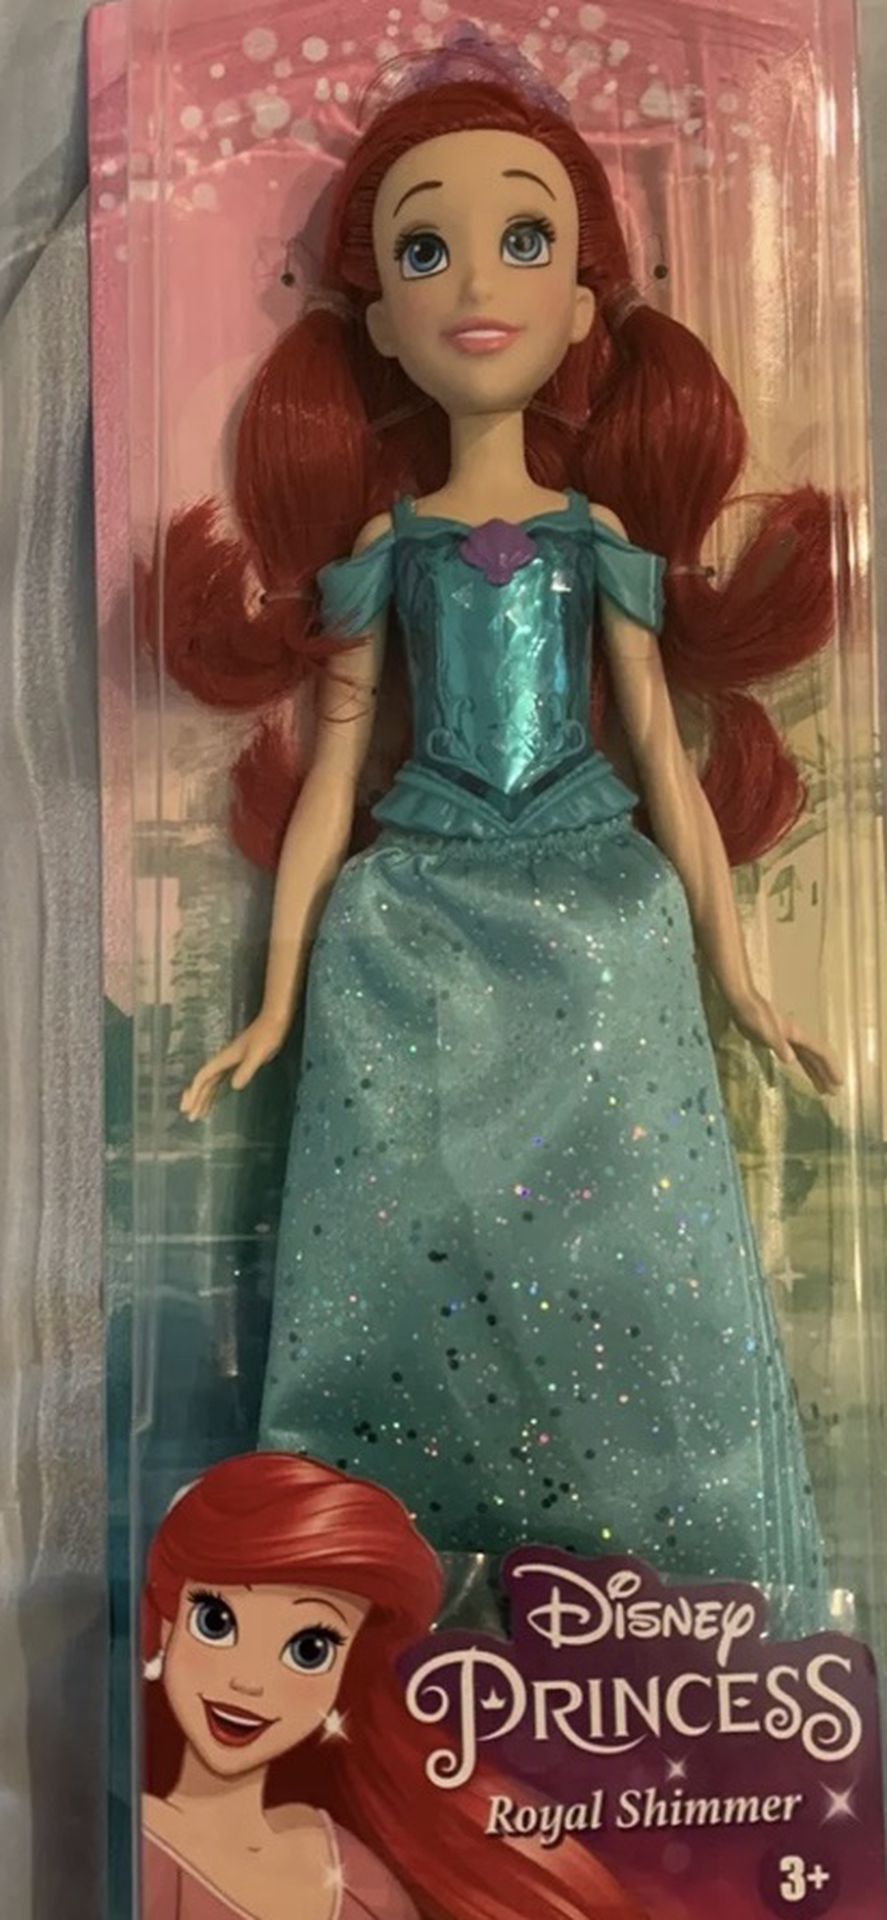 Disney Princess Royal Shimmer - Little Mermaid (Ariel) New 2021 Design*